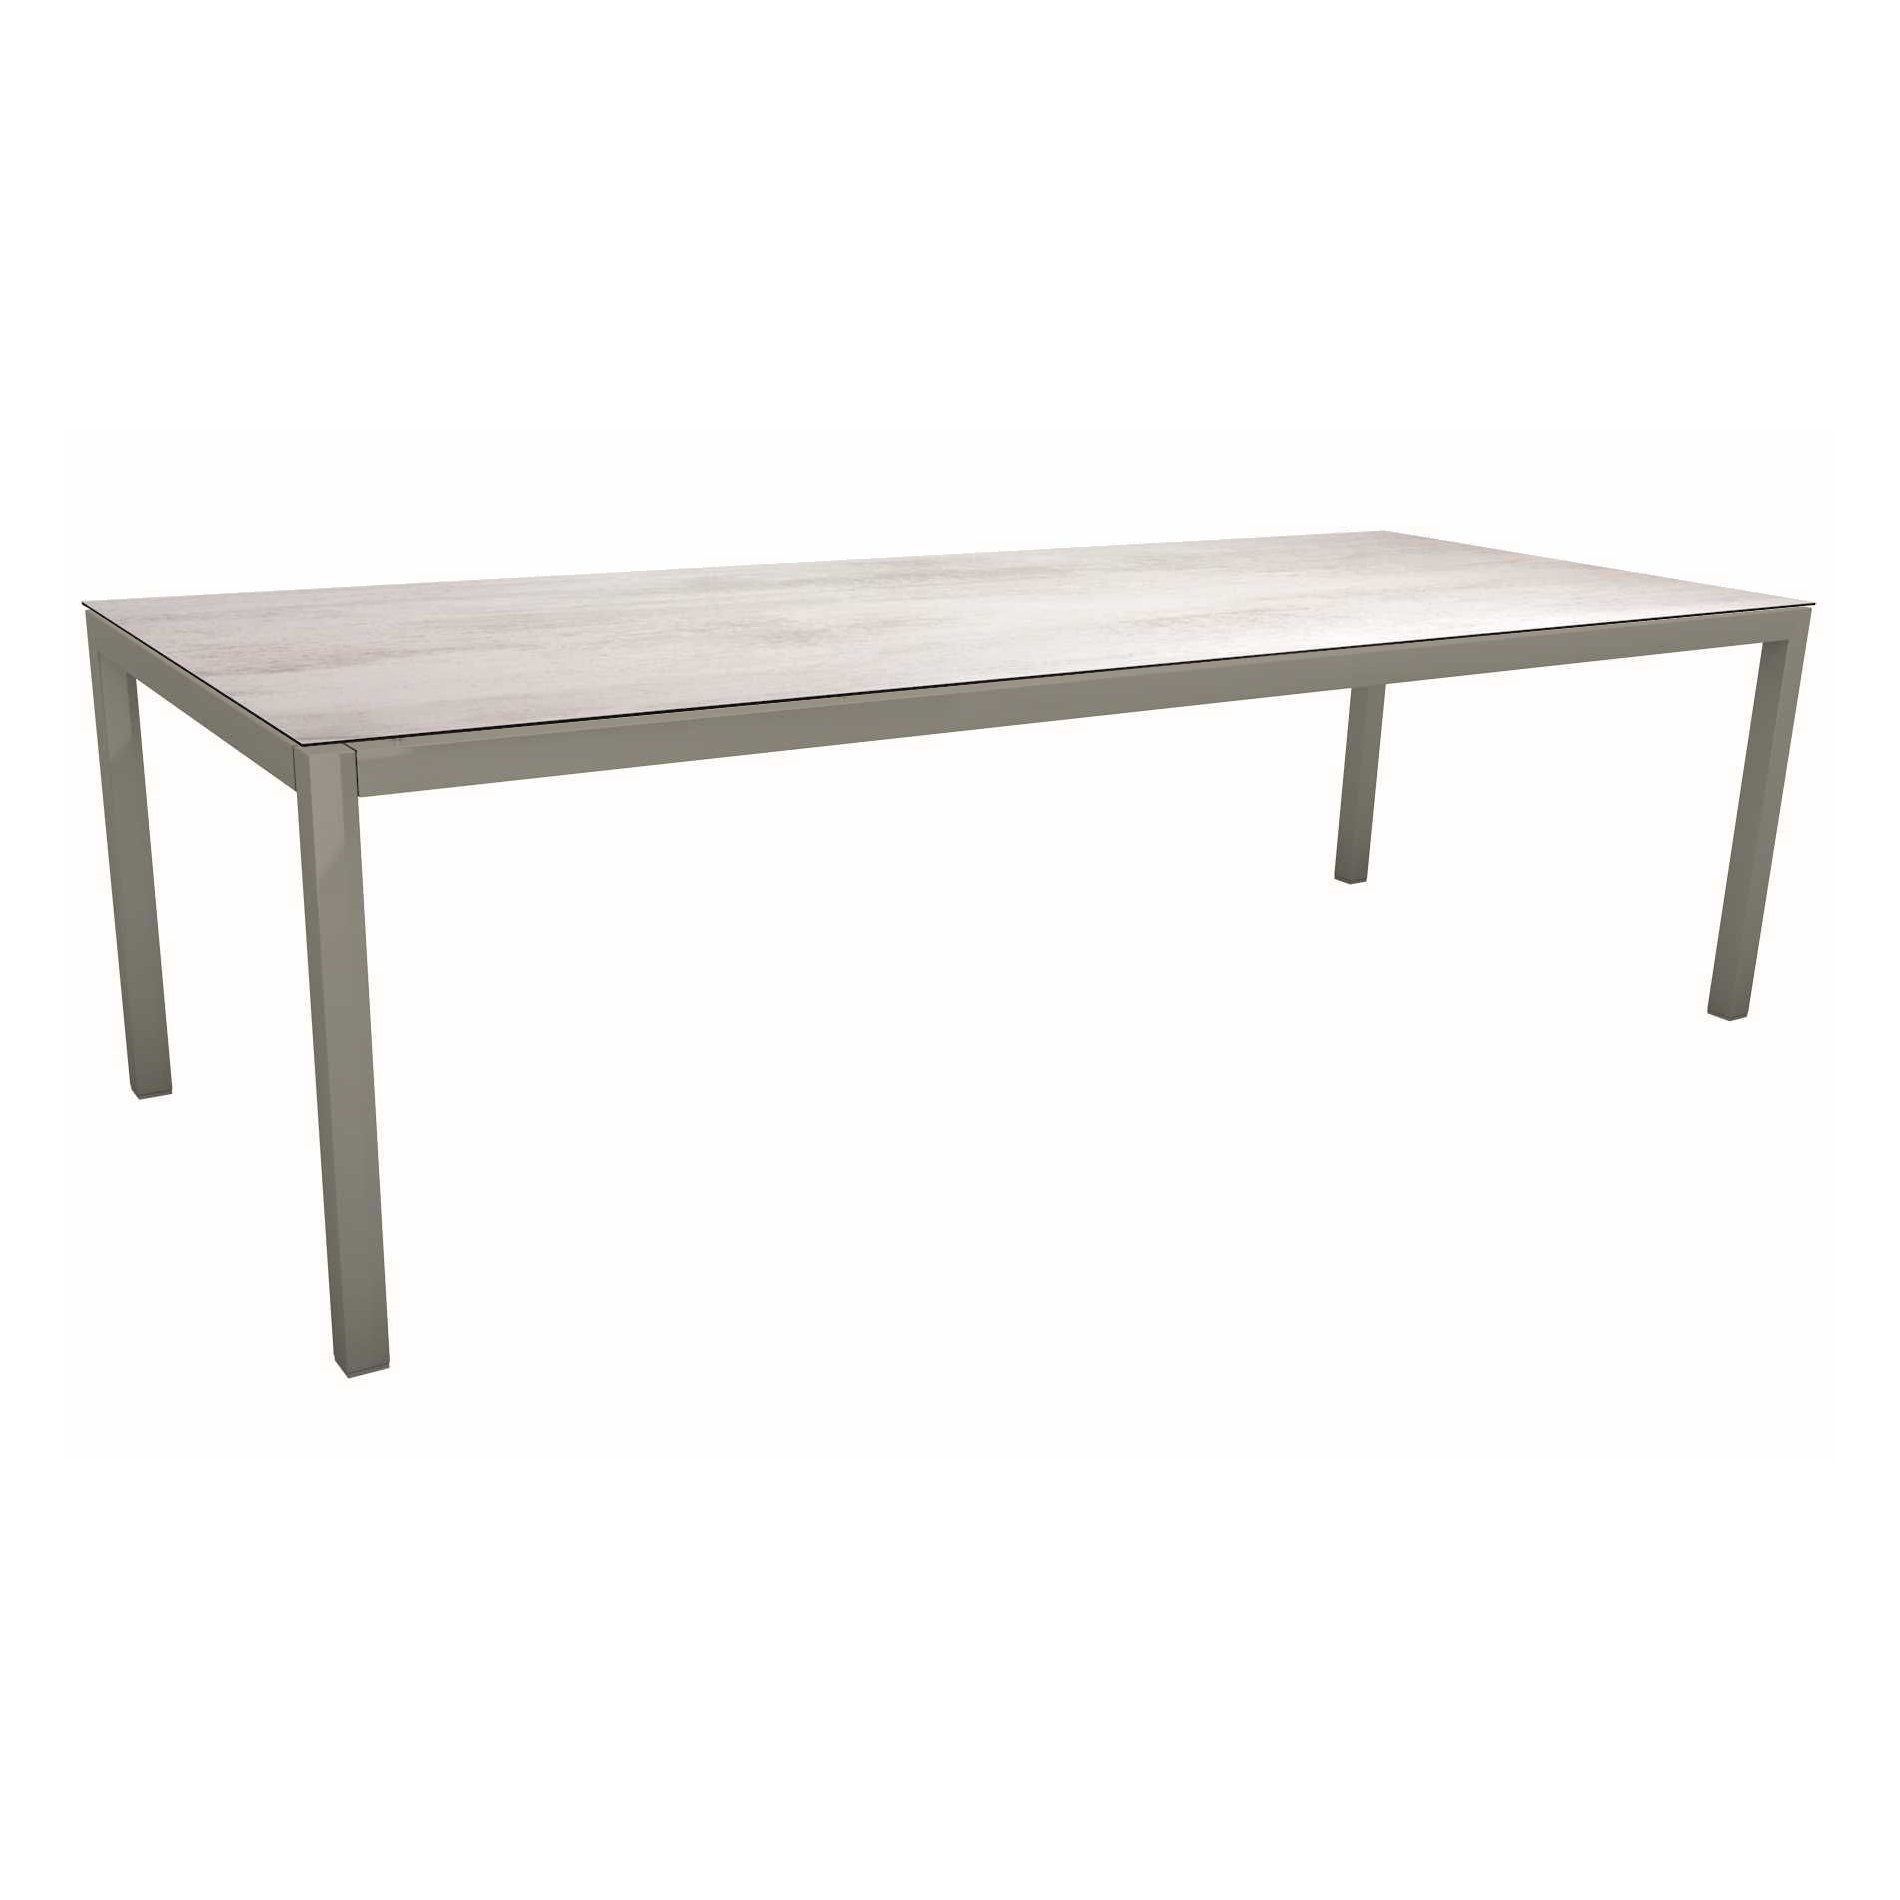 Stern Tischsystem, Gestell Aluminium graphit, Tischplatte HPL Zement hell, 250x100 cm